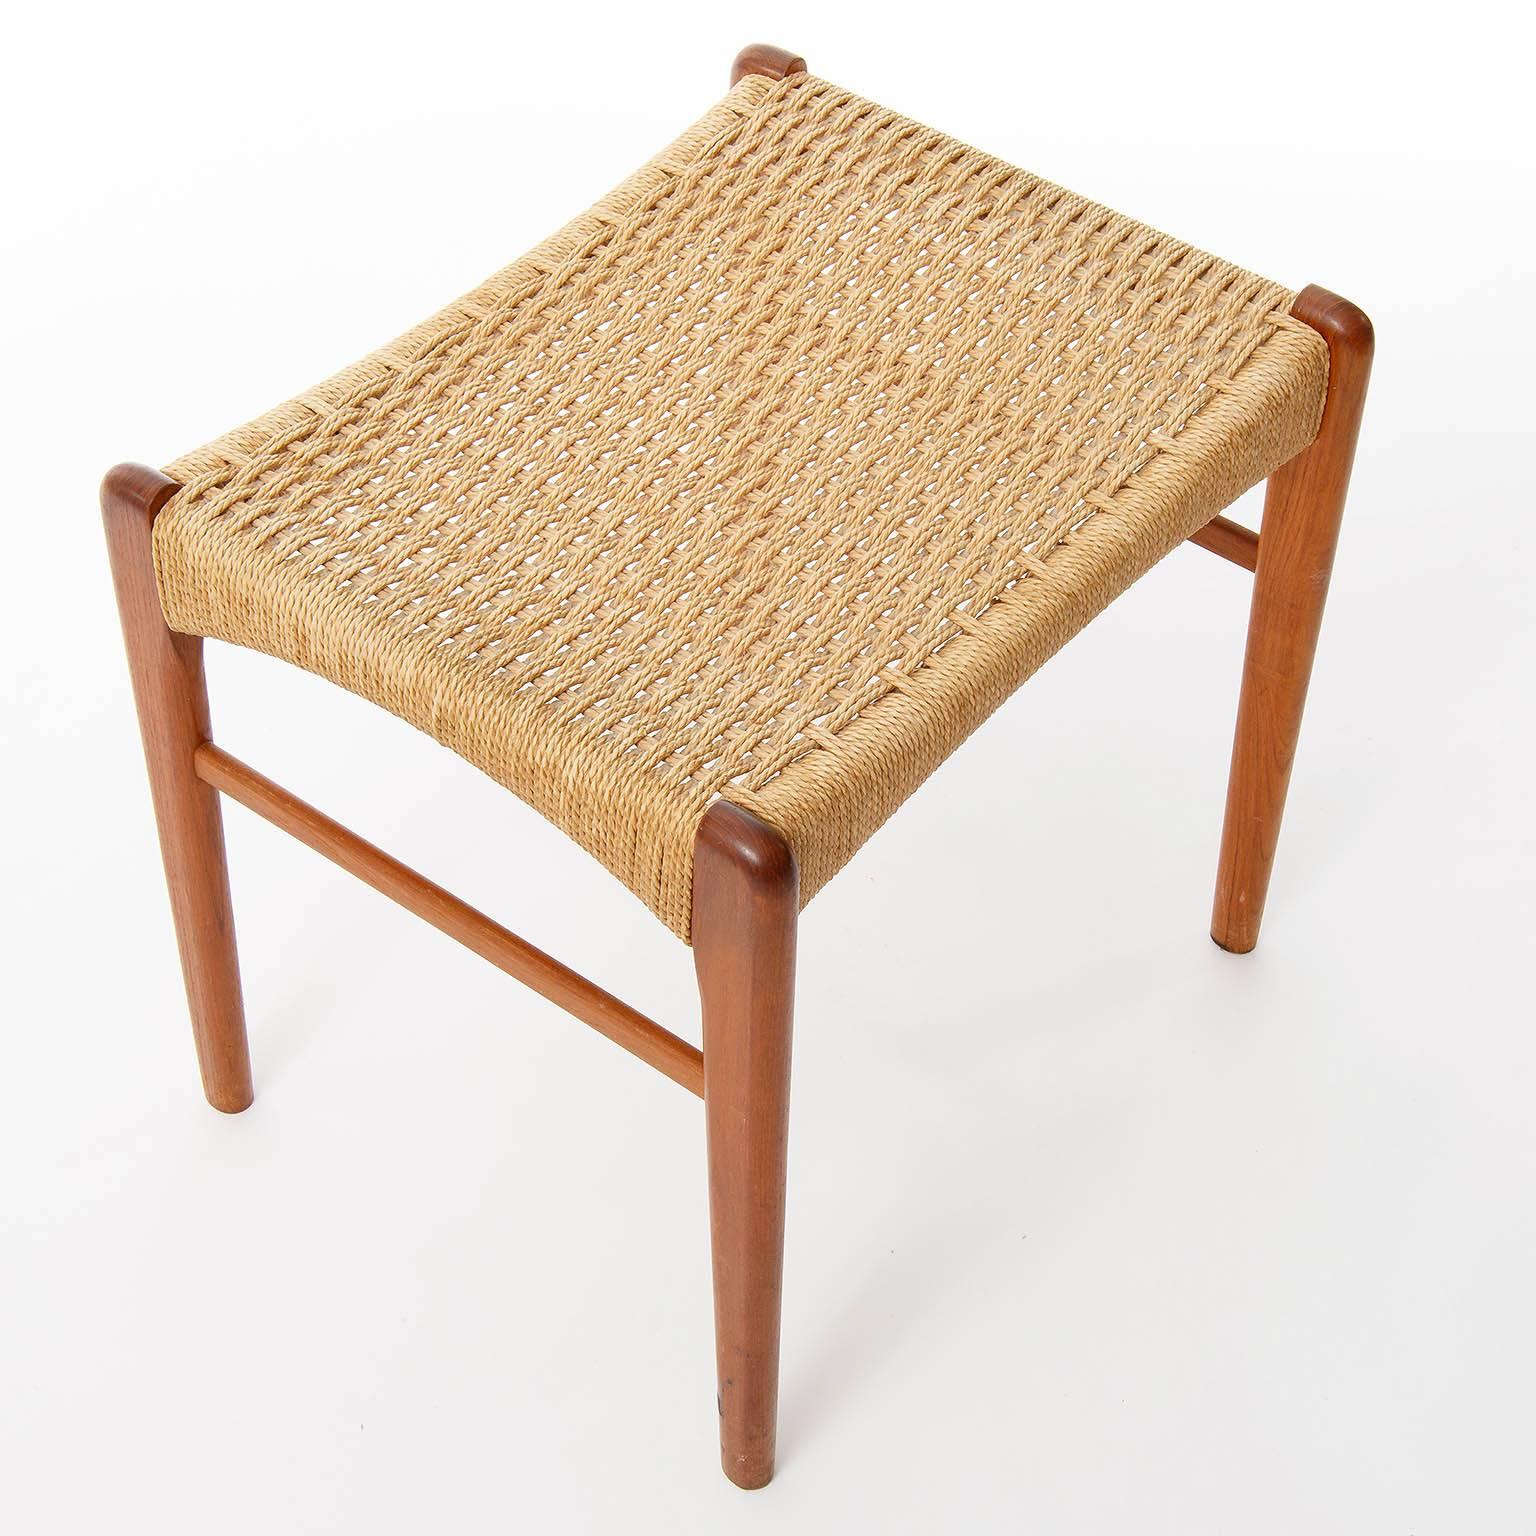 A Danish Scandinavian Modern stool made of teak and paper cord. Excellent original condition.